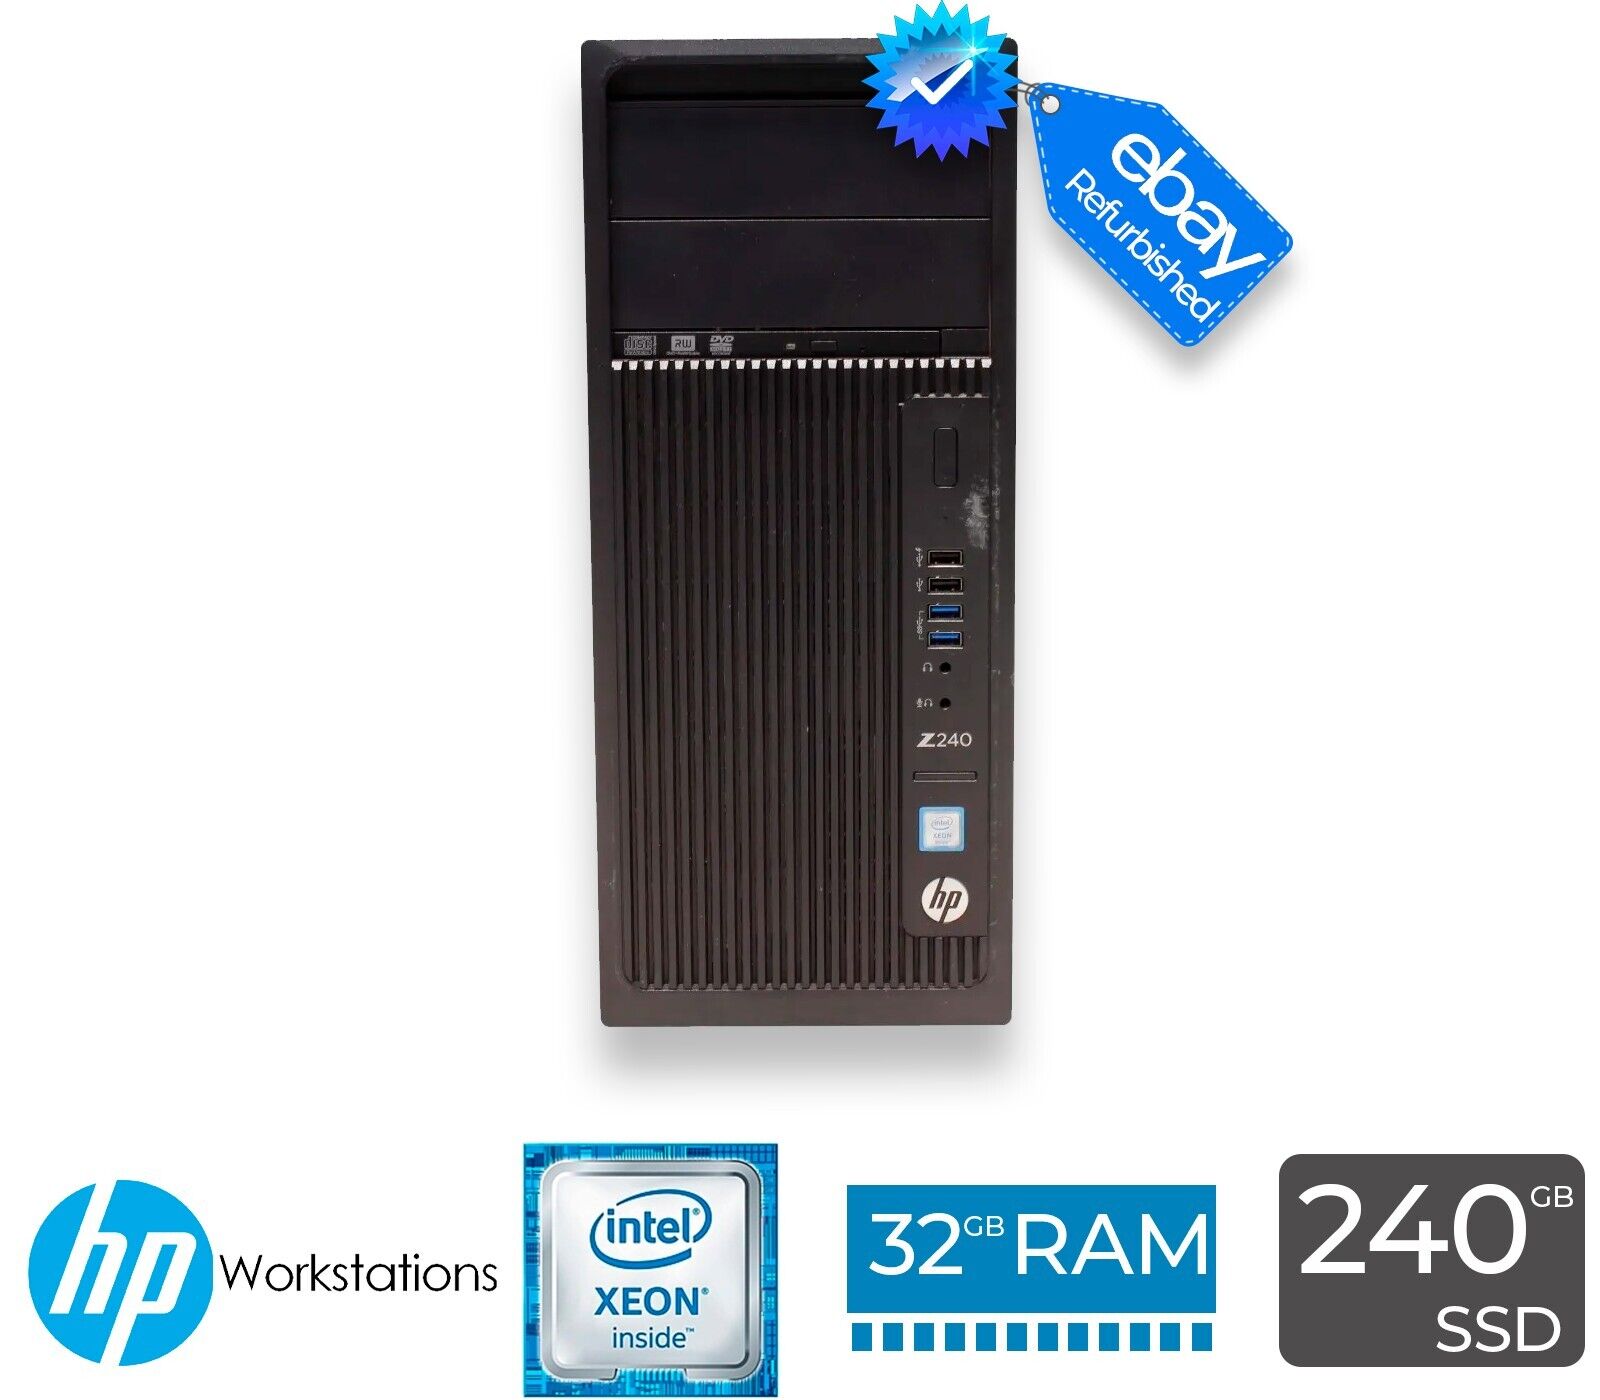 HP Z240 Tower Workstation Intel Xeon E3-1225 v5 32GB RAM 240GB SSD Win 10 P4000